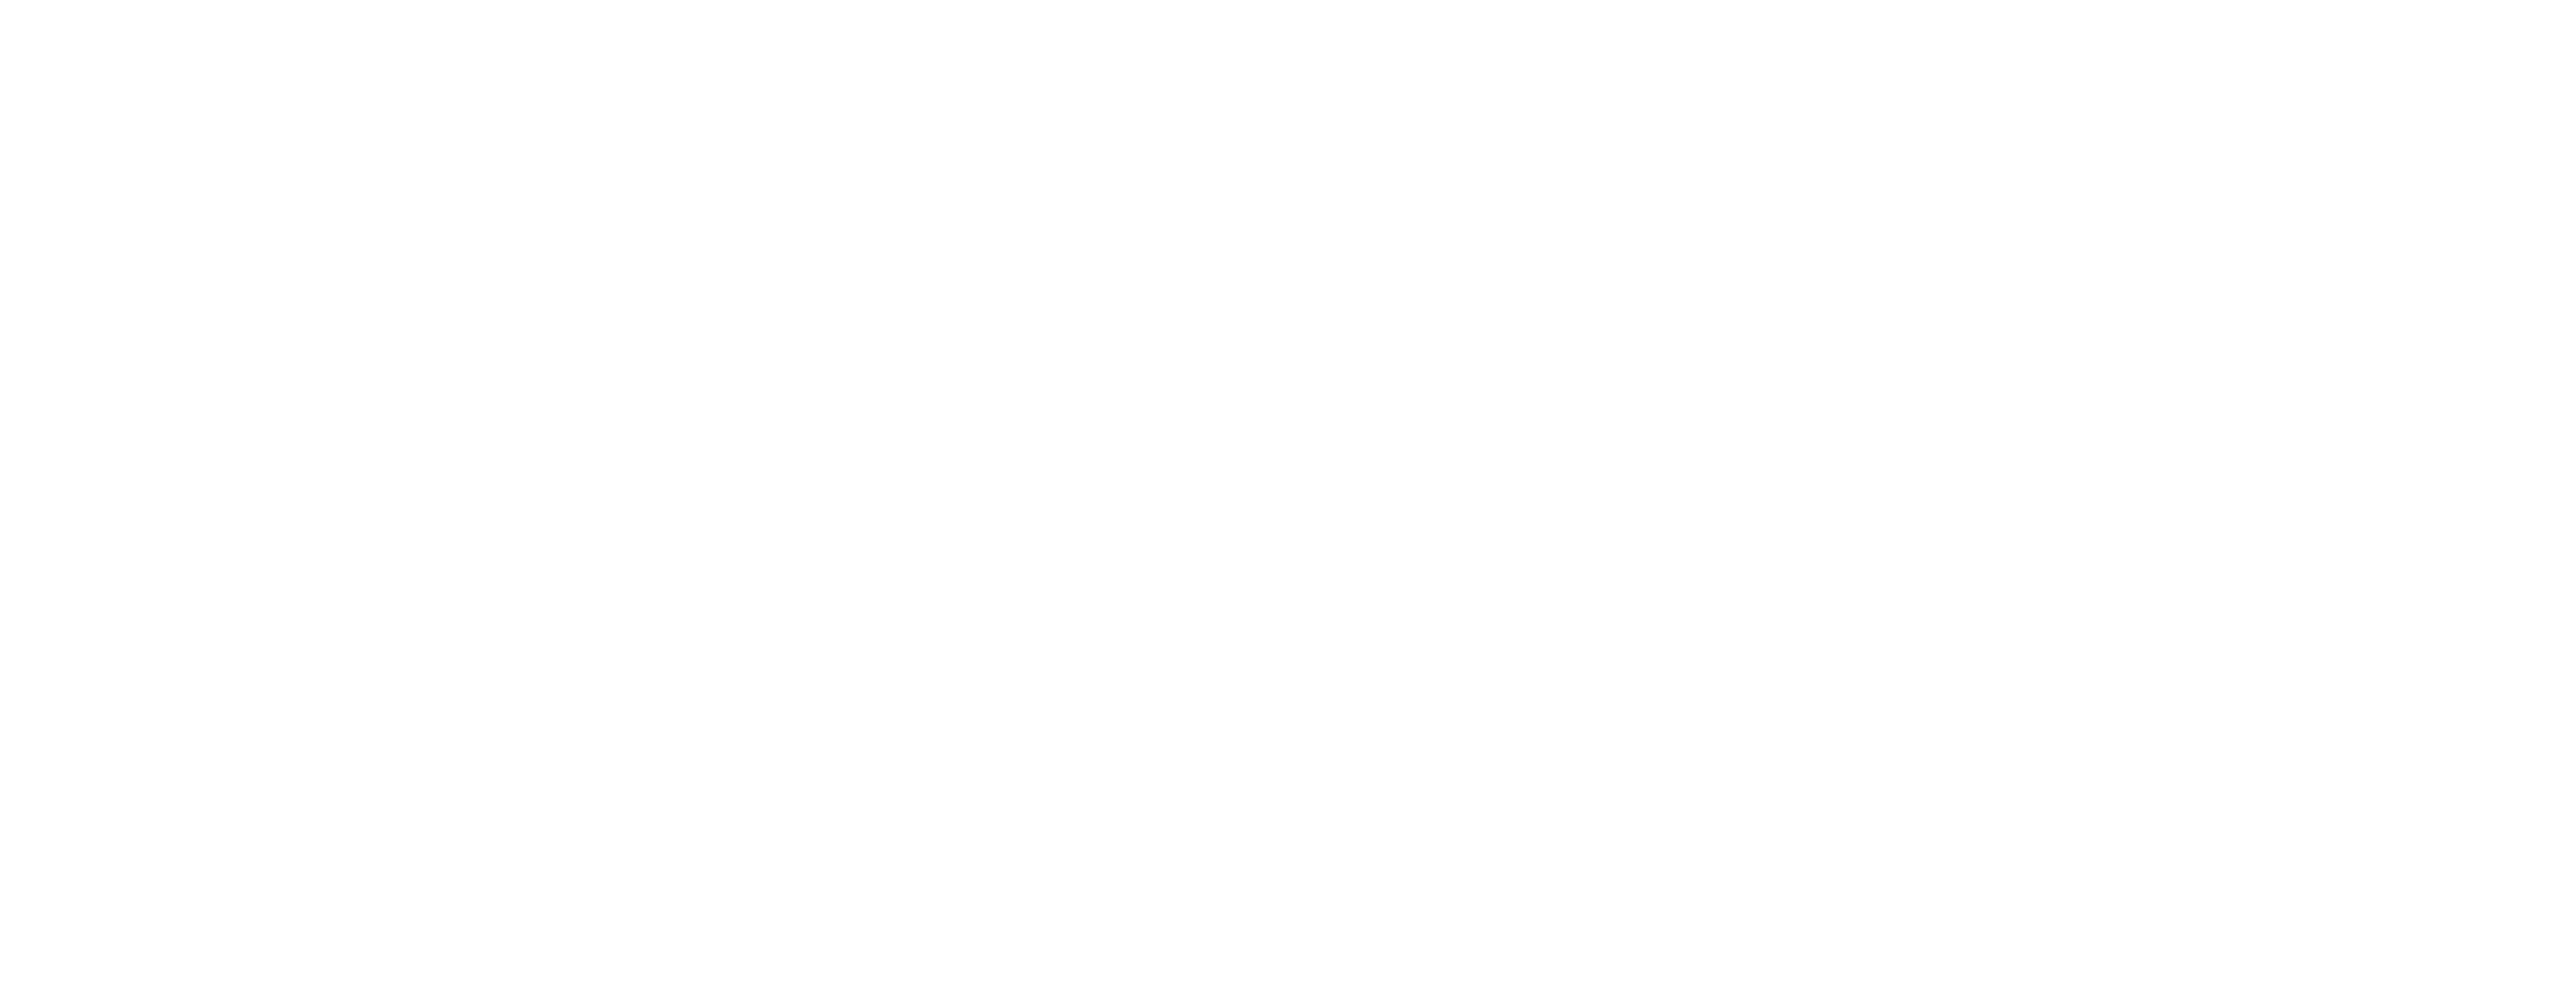 Carol Egan logo